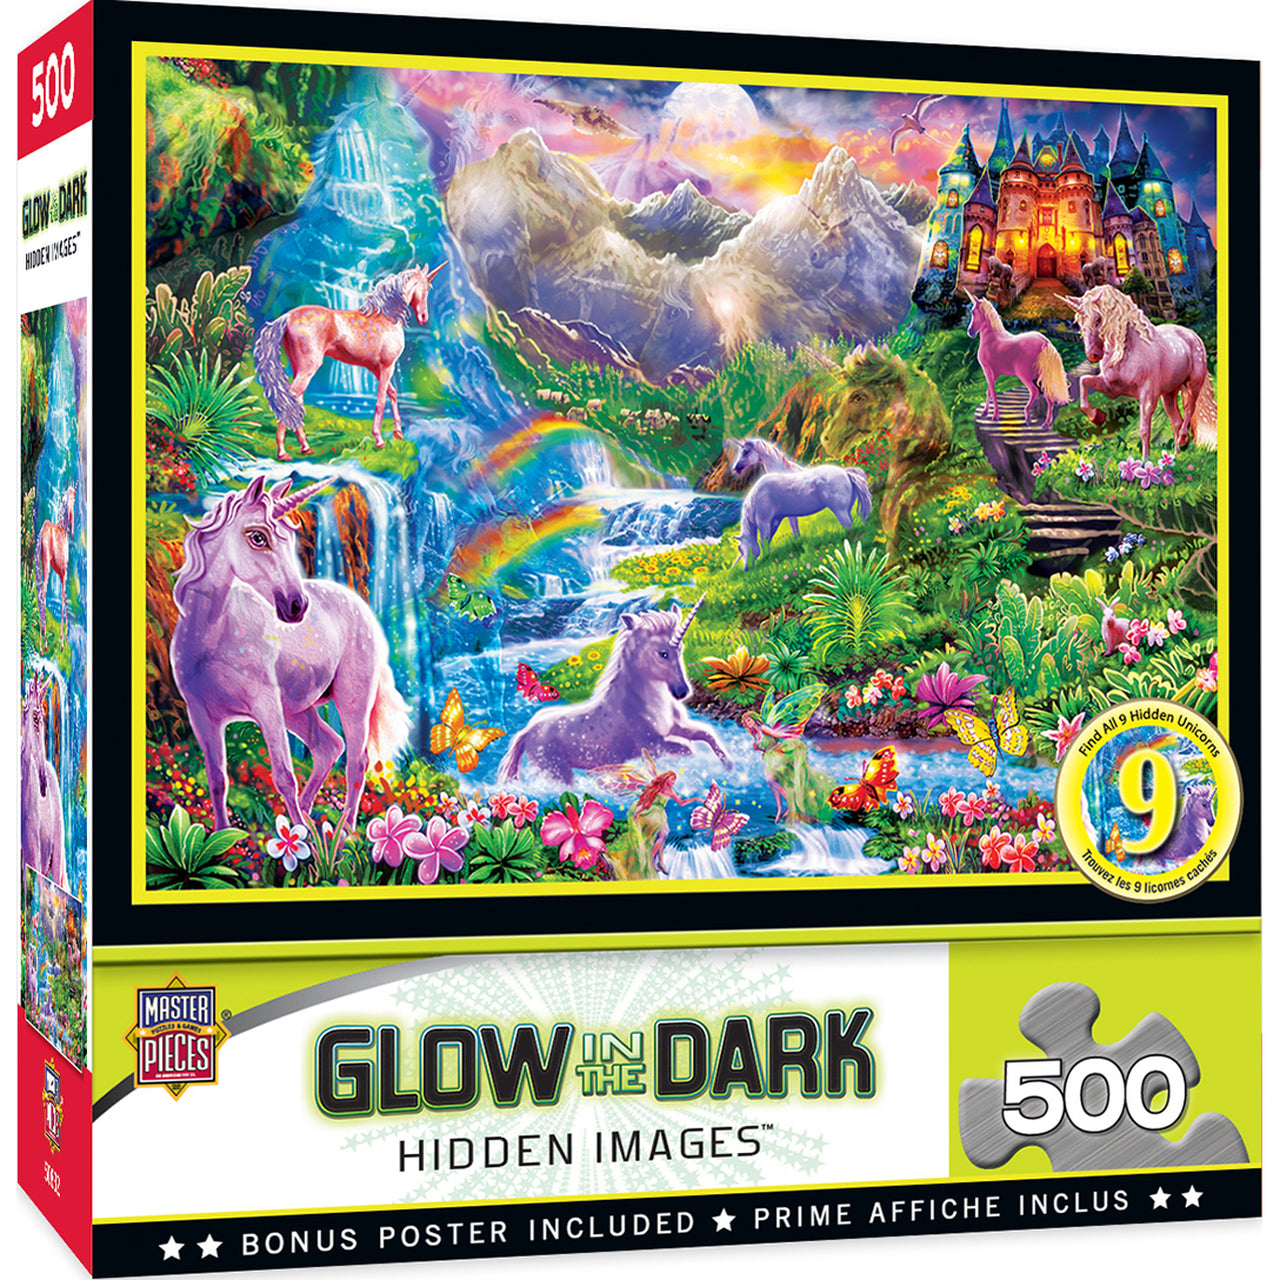 Unicorn's Retreat Glow in the Dark 500pc Puzzle